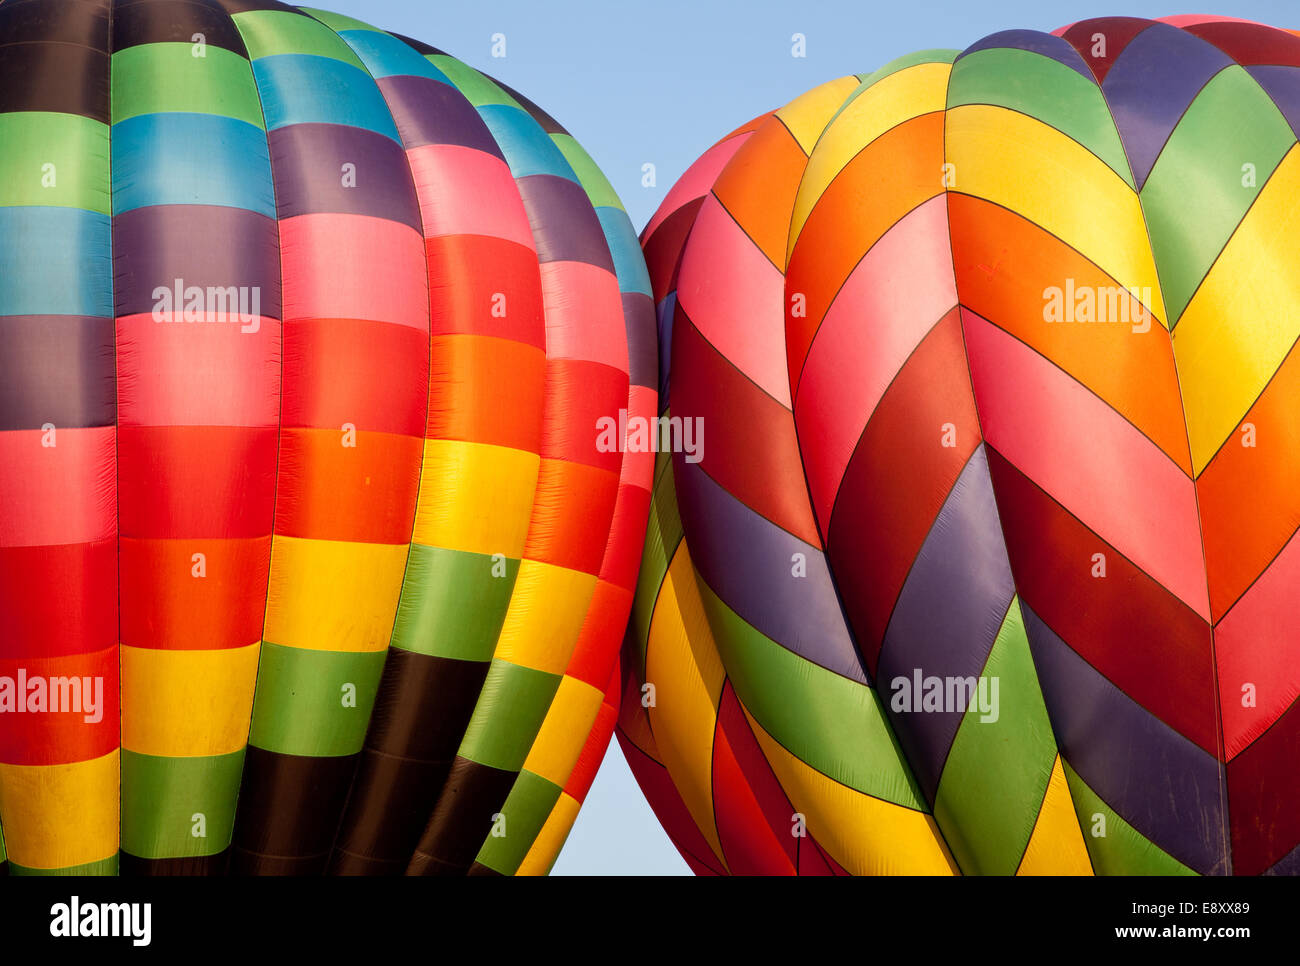 Hot air balloons bumping during inflation Stock Photo